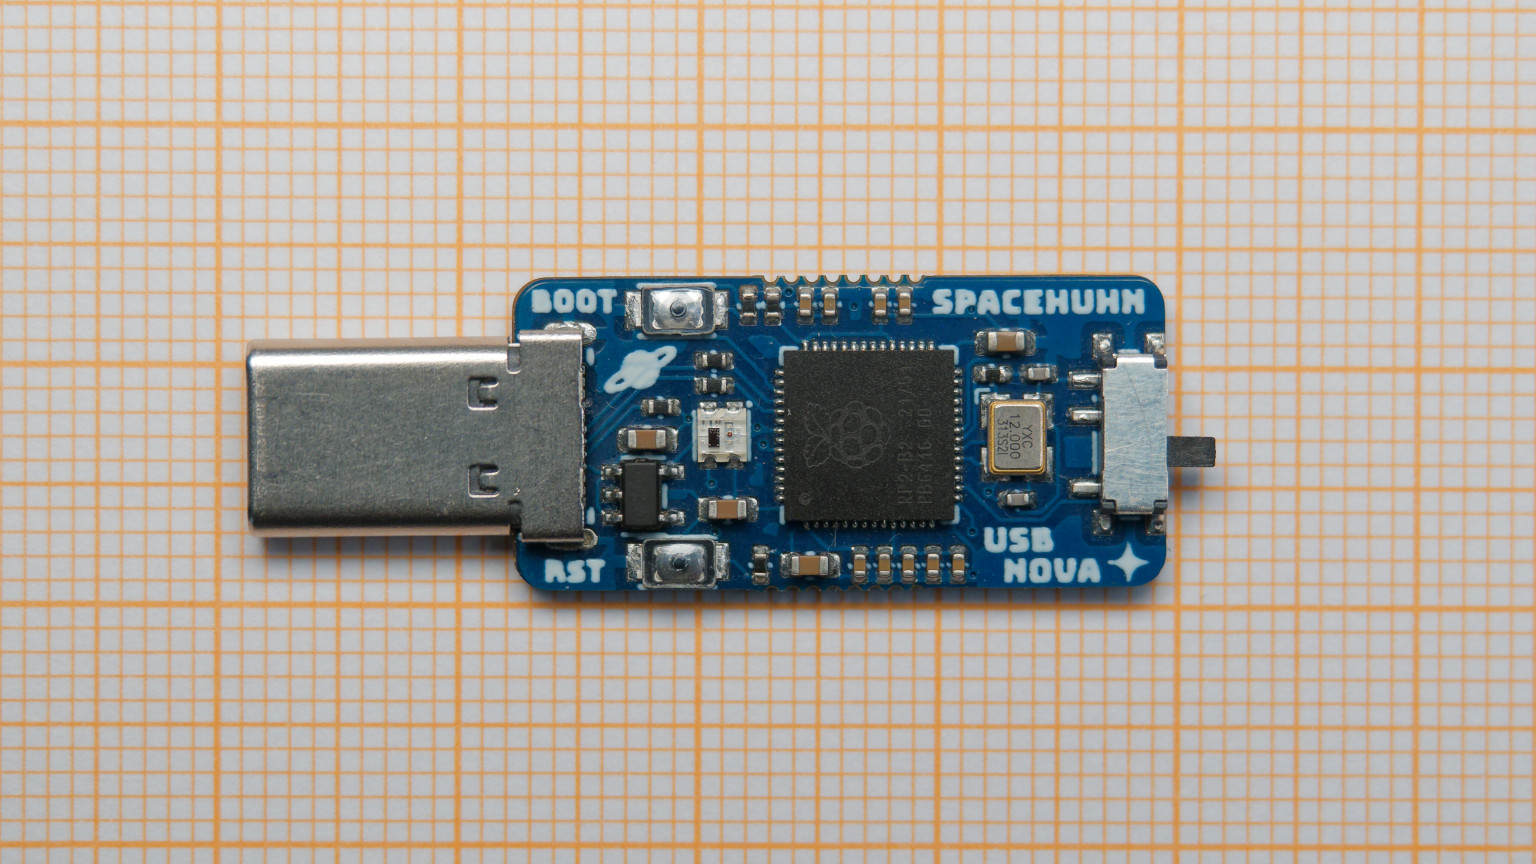 USB Nova mkII (USB-c) without case